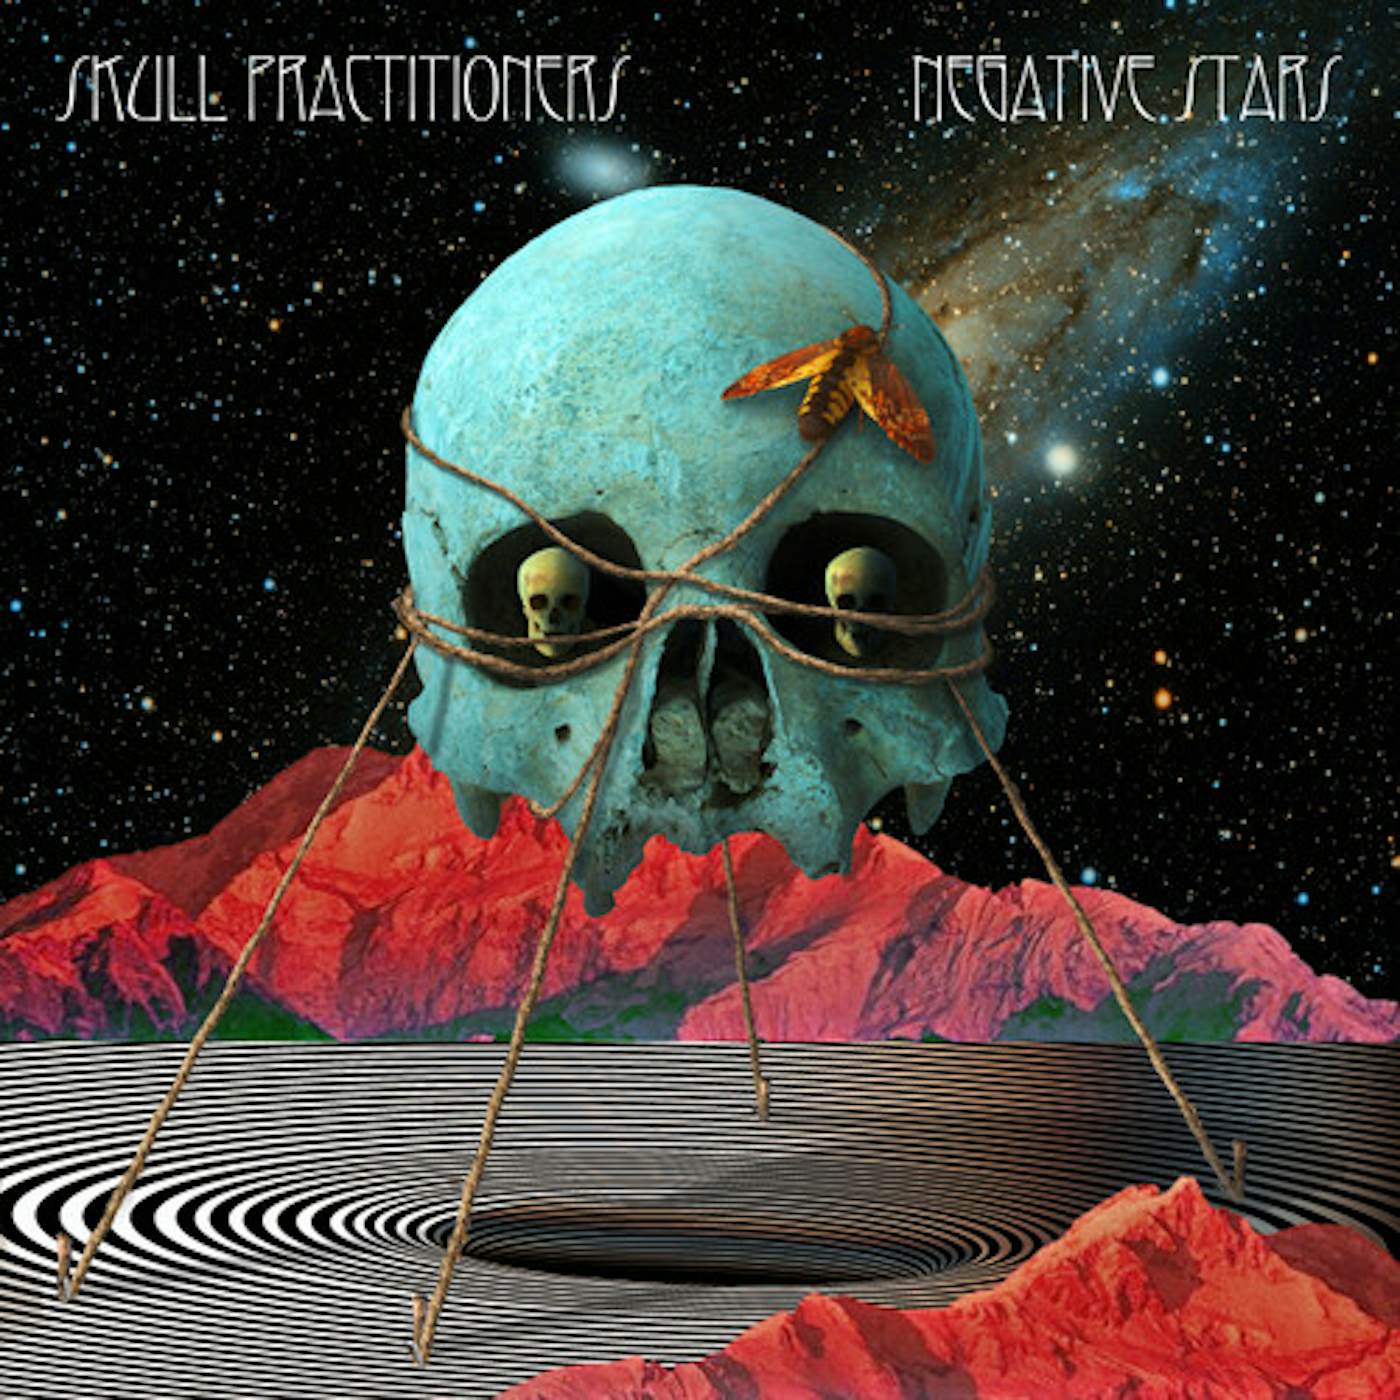 Skull Practitioners Negative Stars Vinyl Record